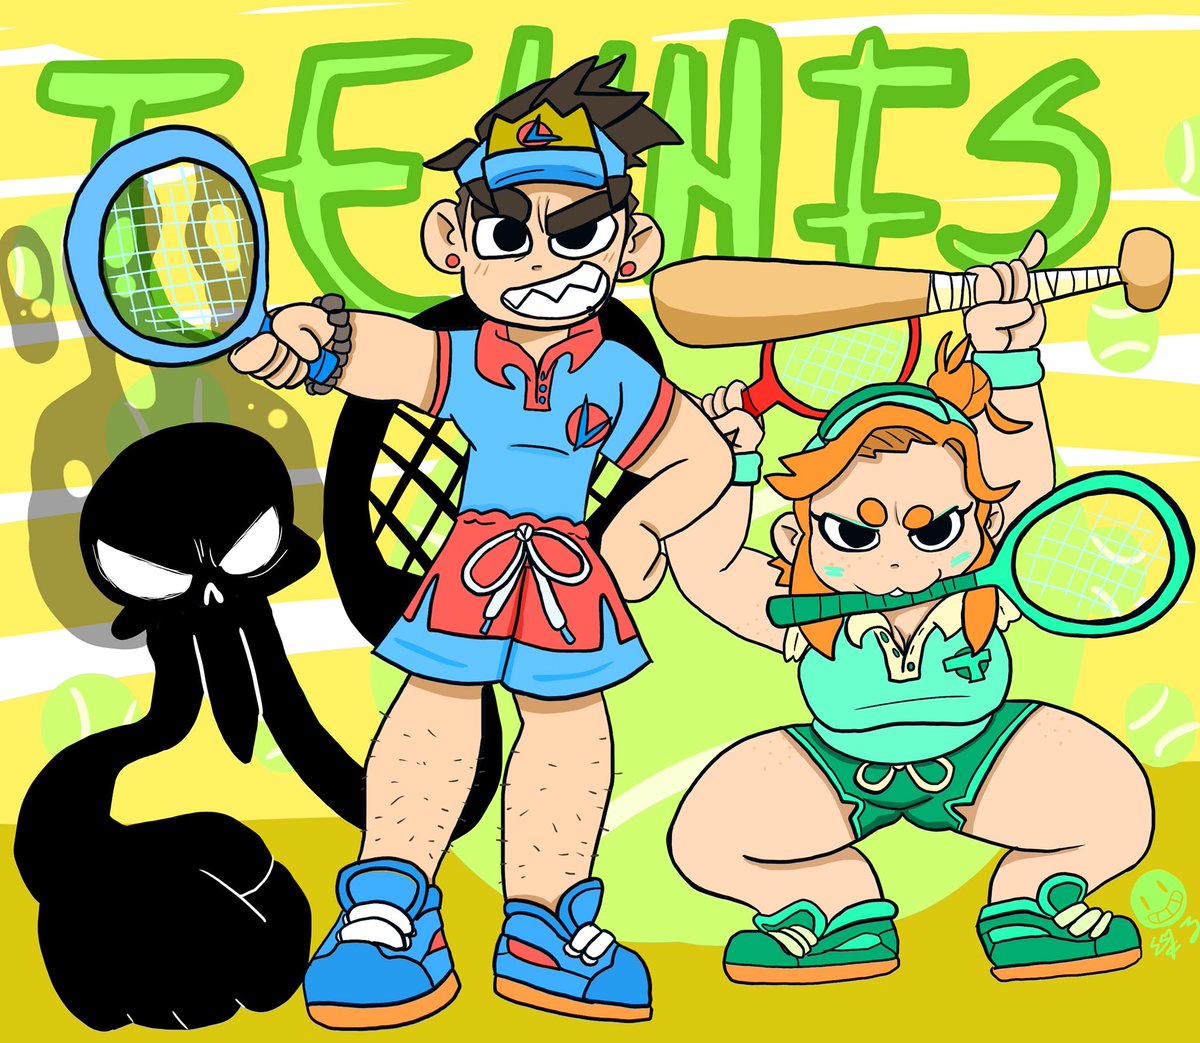 Tennis Battle Team!!! (Obbaba, Carrots and Me) 
#tennis #cartoon #drawing #tennisbattle #tenis #tenis🎾 #racket #youaregoingdown #leunam #leunamia